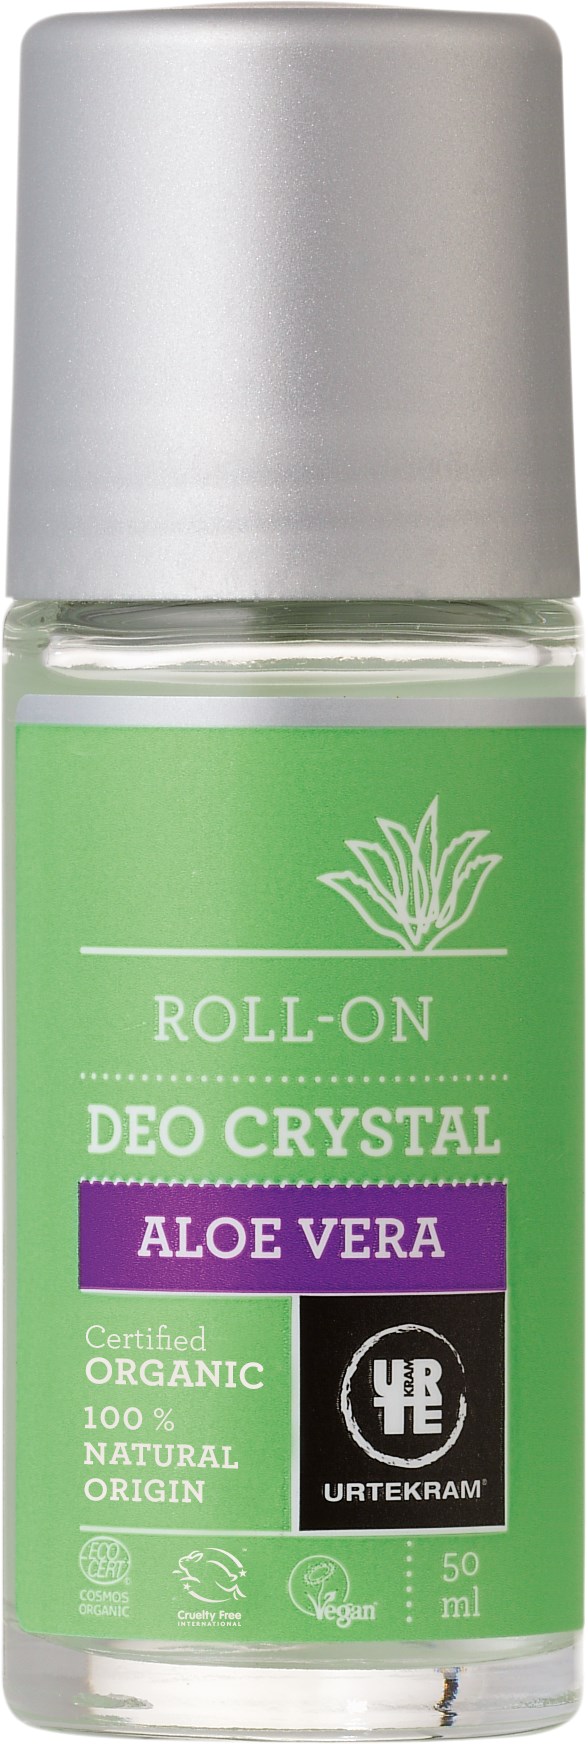 Urtekram Aloe Vera Crystal Deodorant